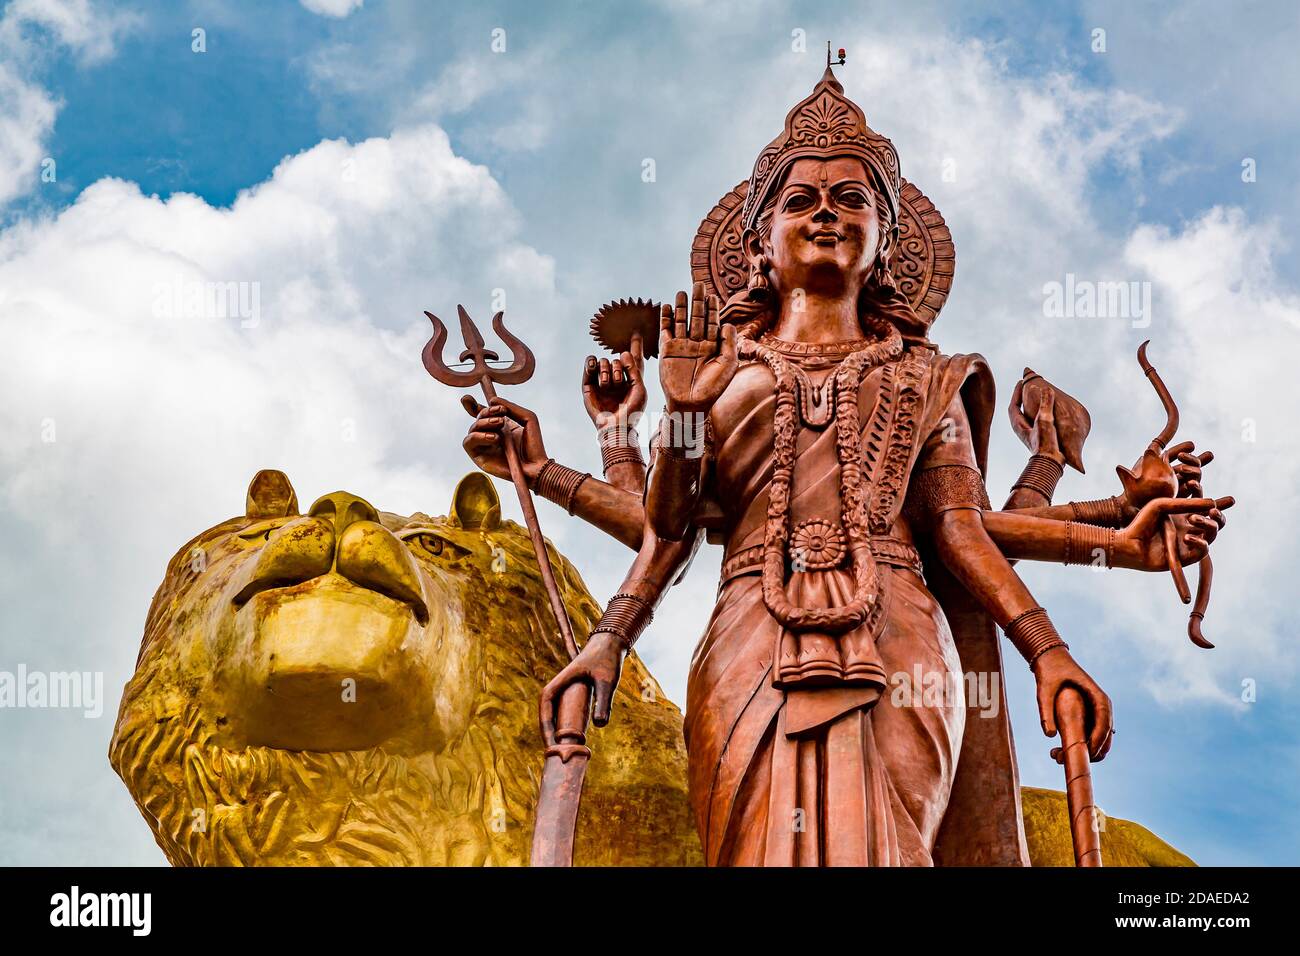 Ganga maa hi-res stock photography and images - Alamy